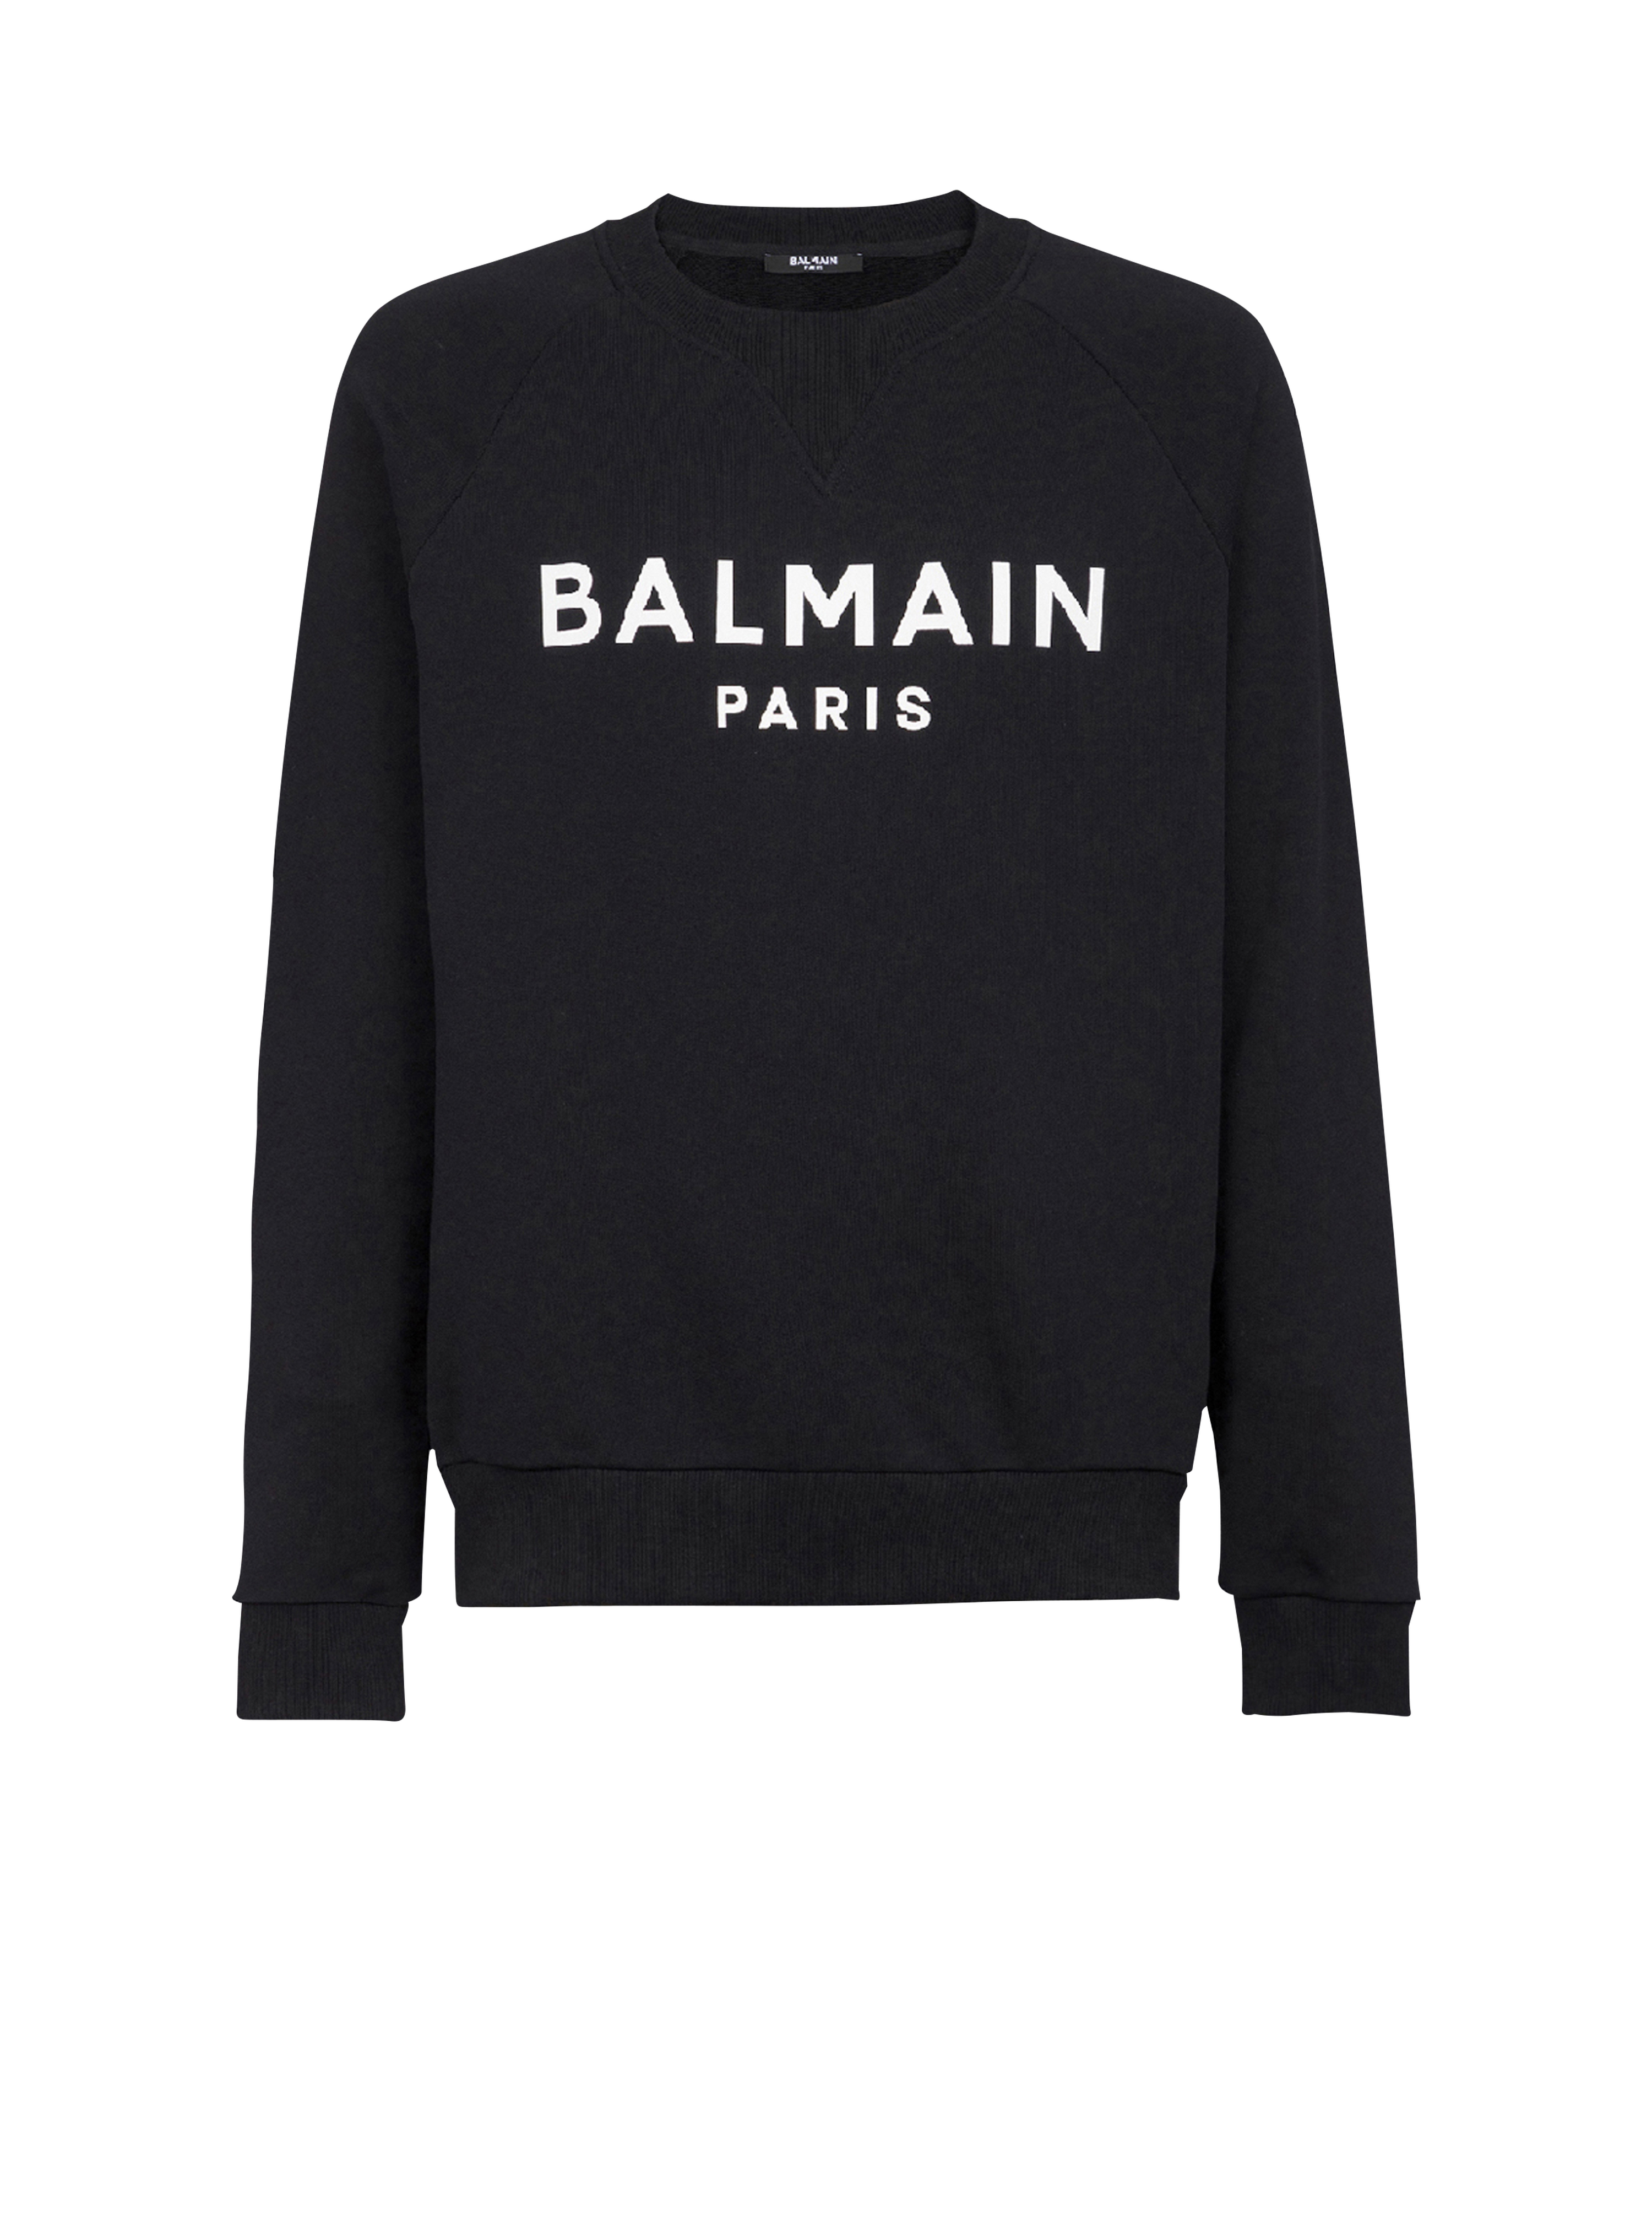 Cotton printed Balmain logo sweatshirt, black